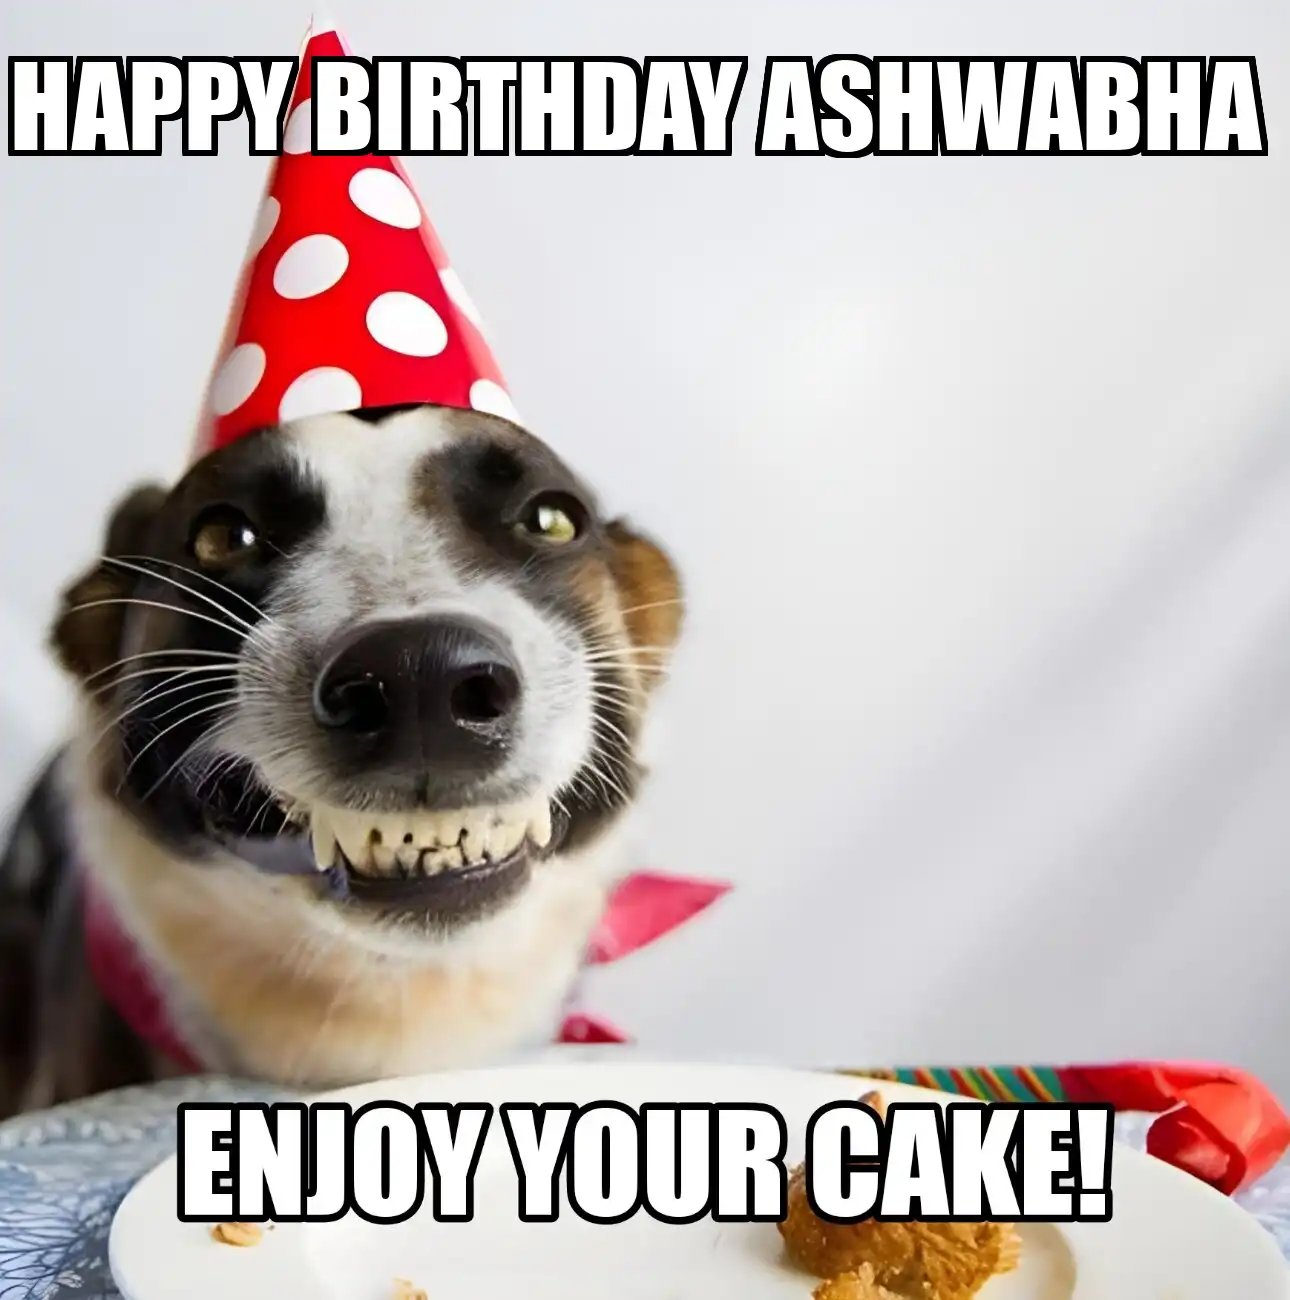 Happy Birthday Ashwabha Enjoy Your Cake Dog Meme